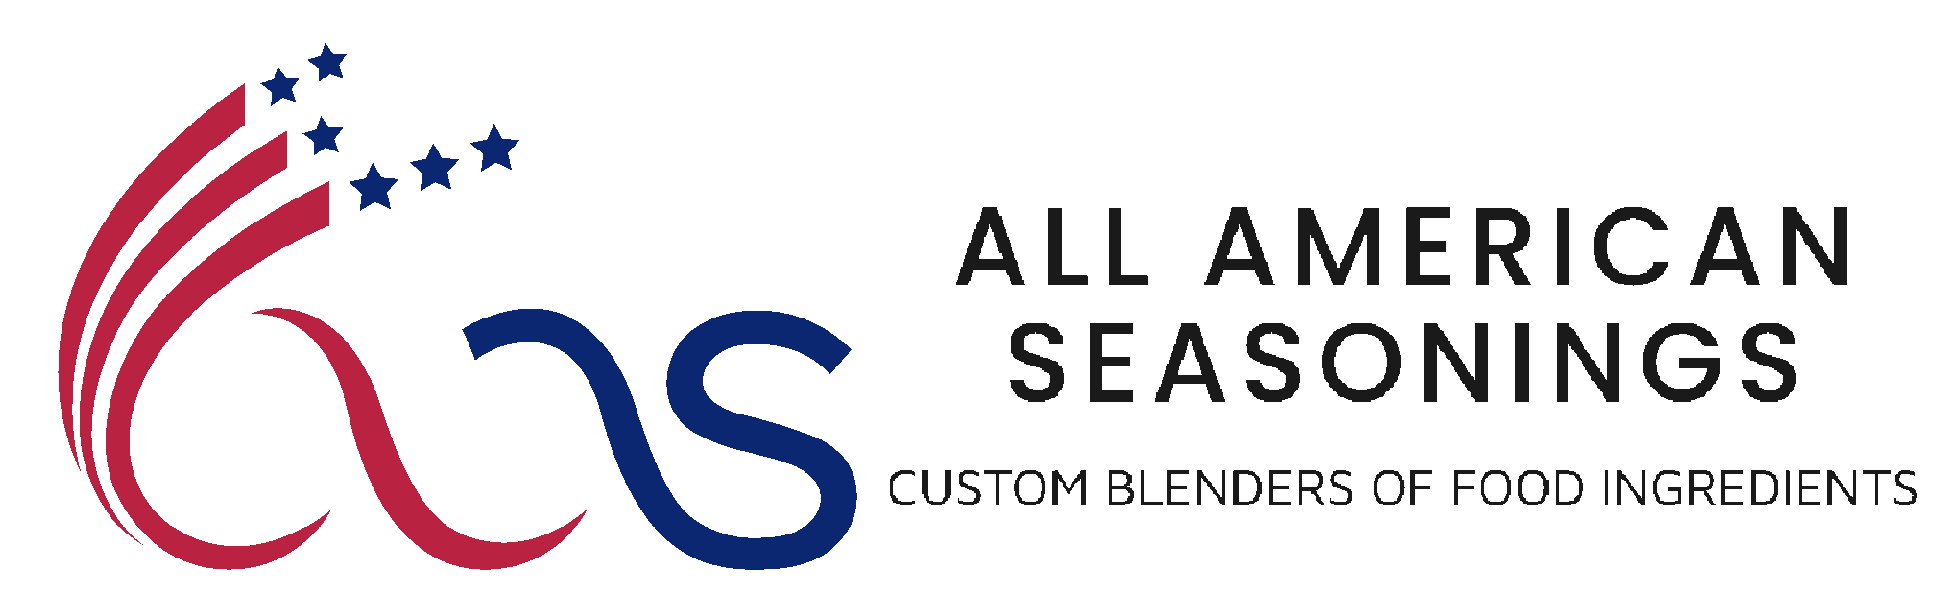 All American Seasonings Logo